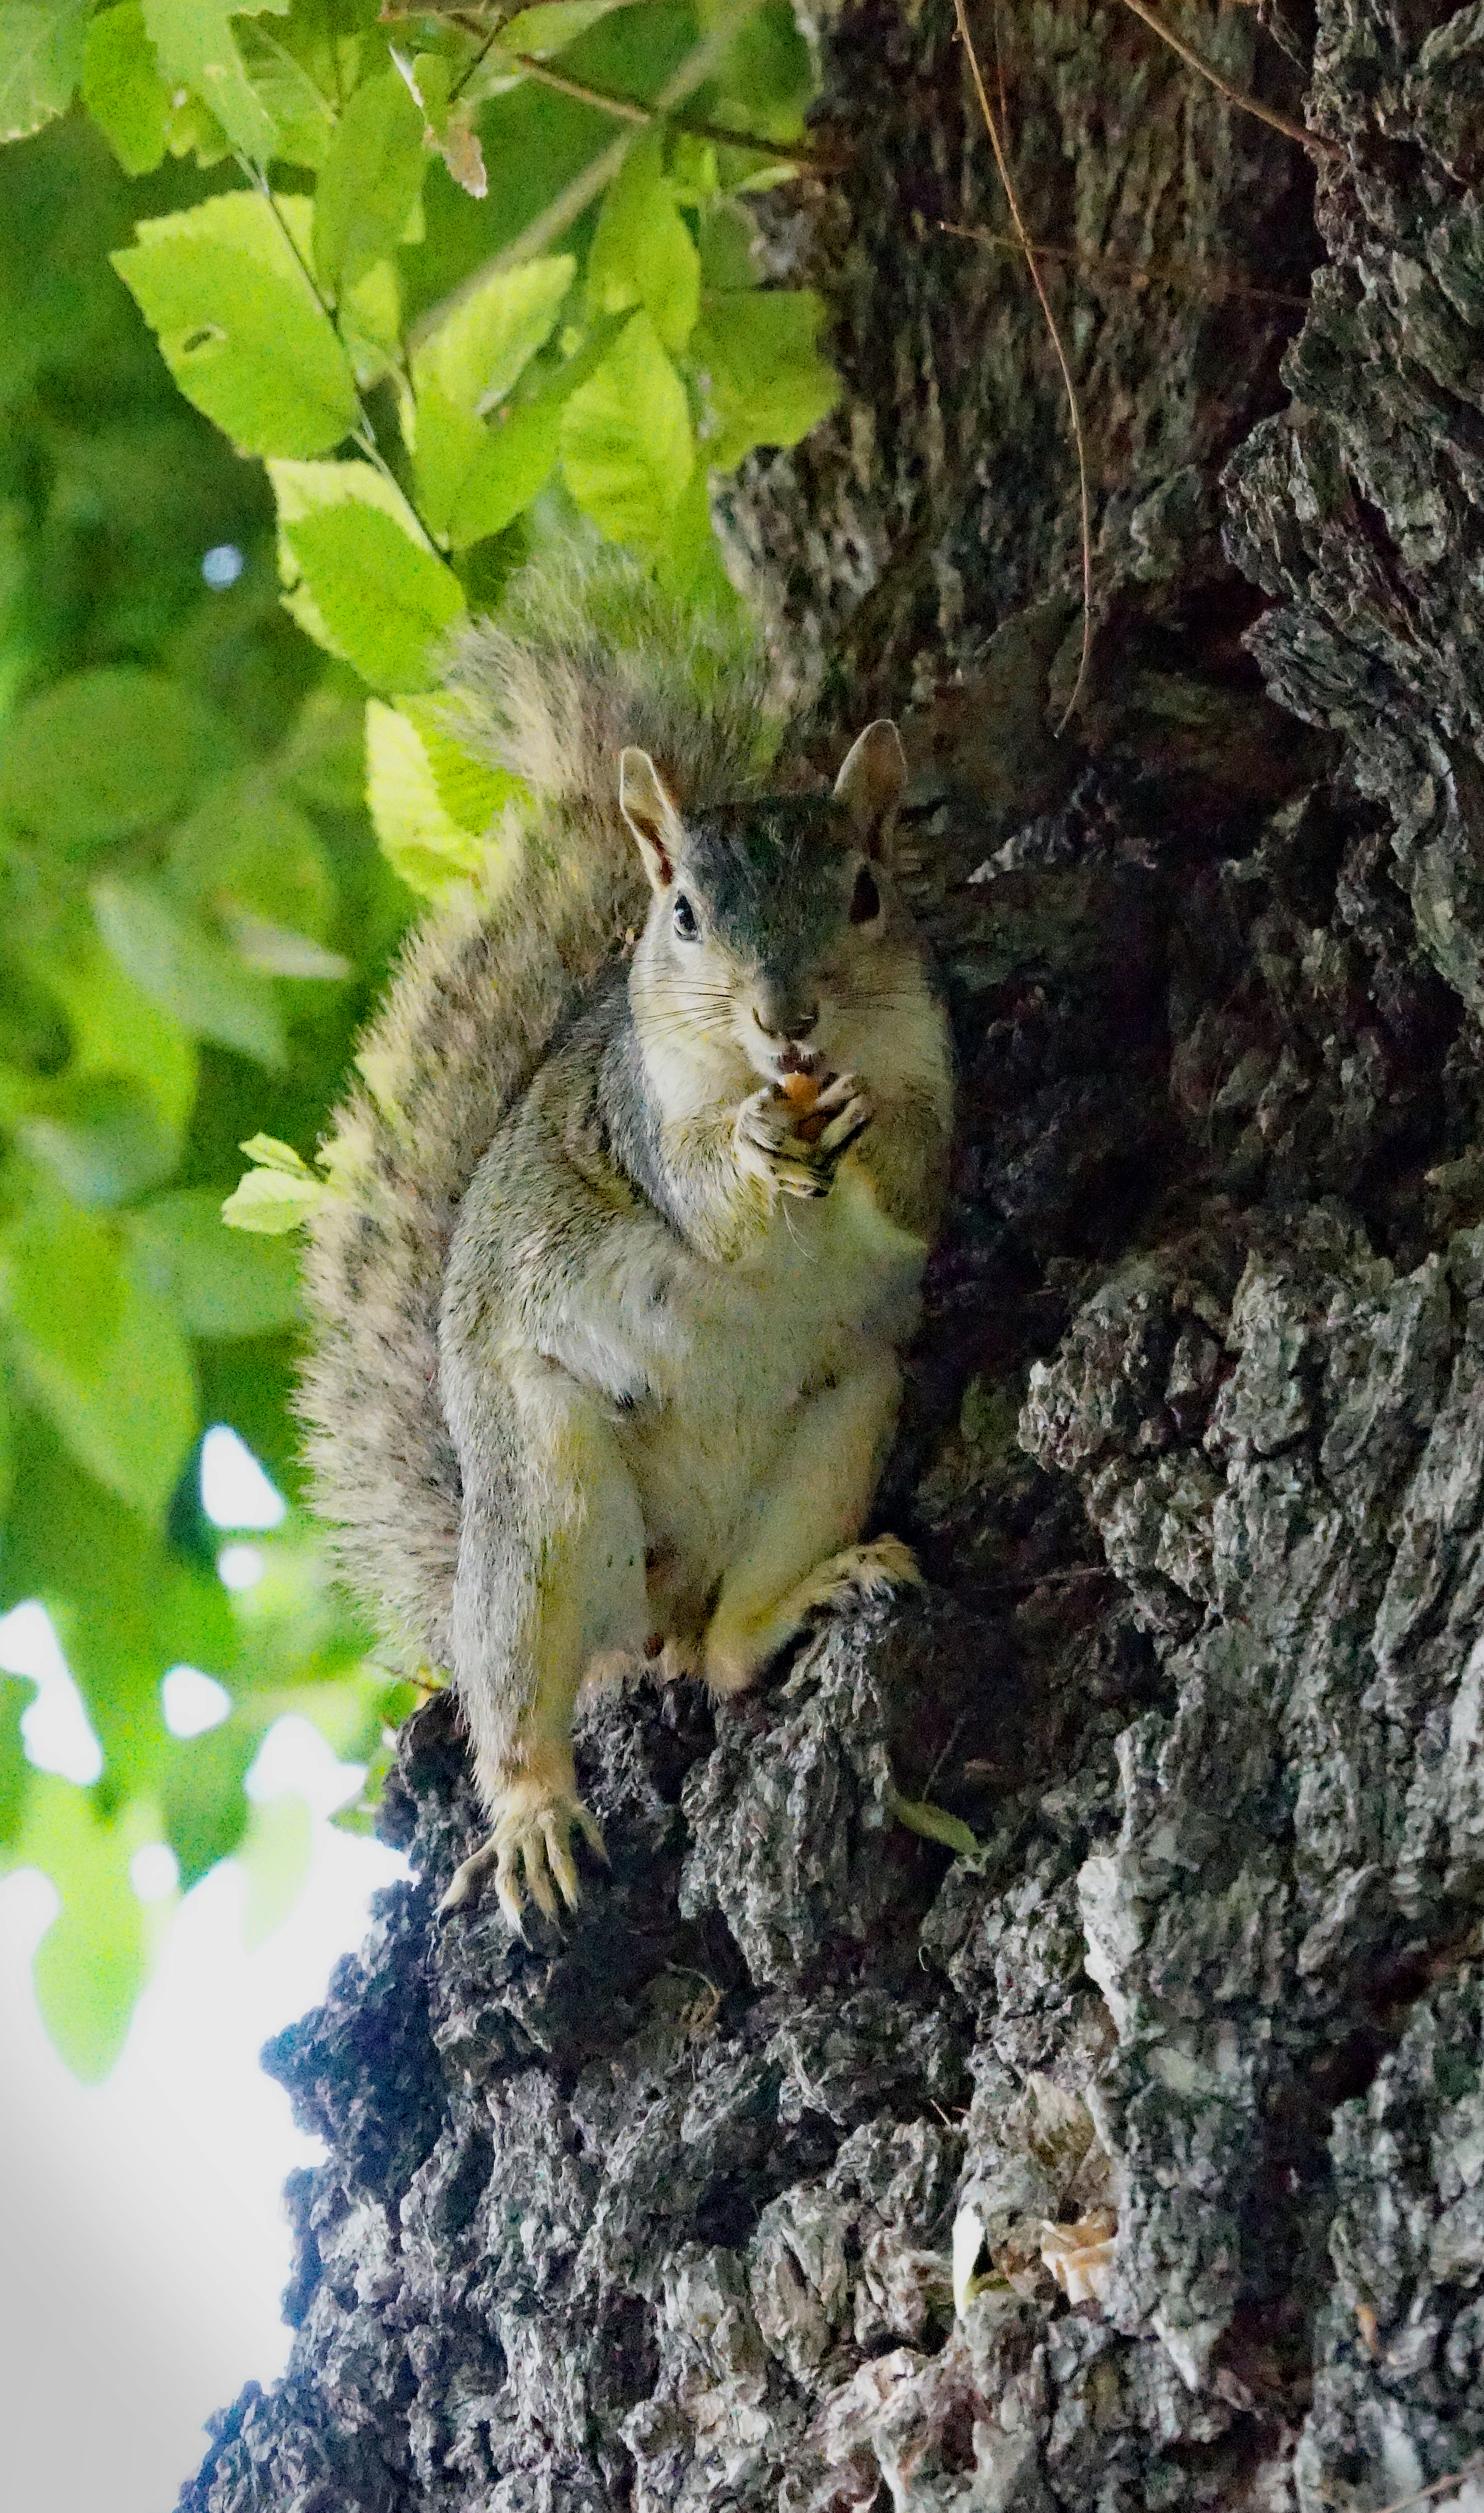 Name:  squirrel%206-3-17%201_zpsofosqtmz.jpg
Views: 698
Size:  15.24 MB